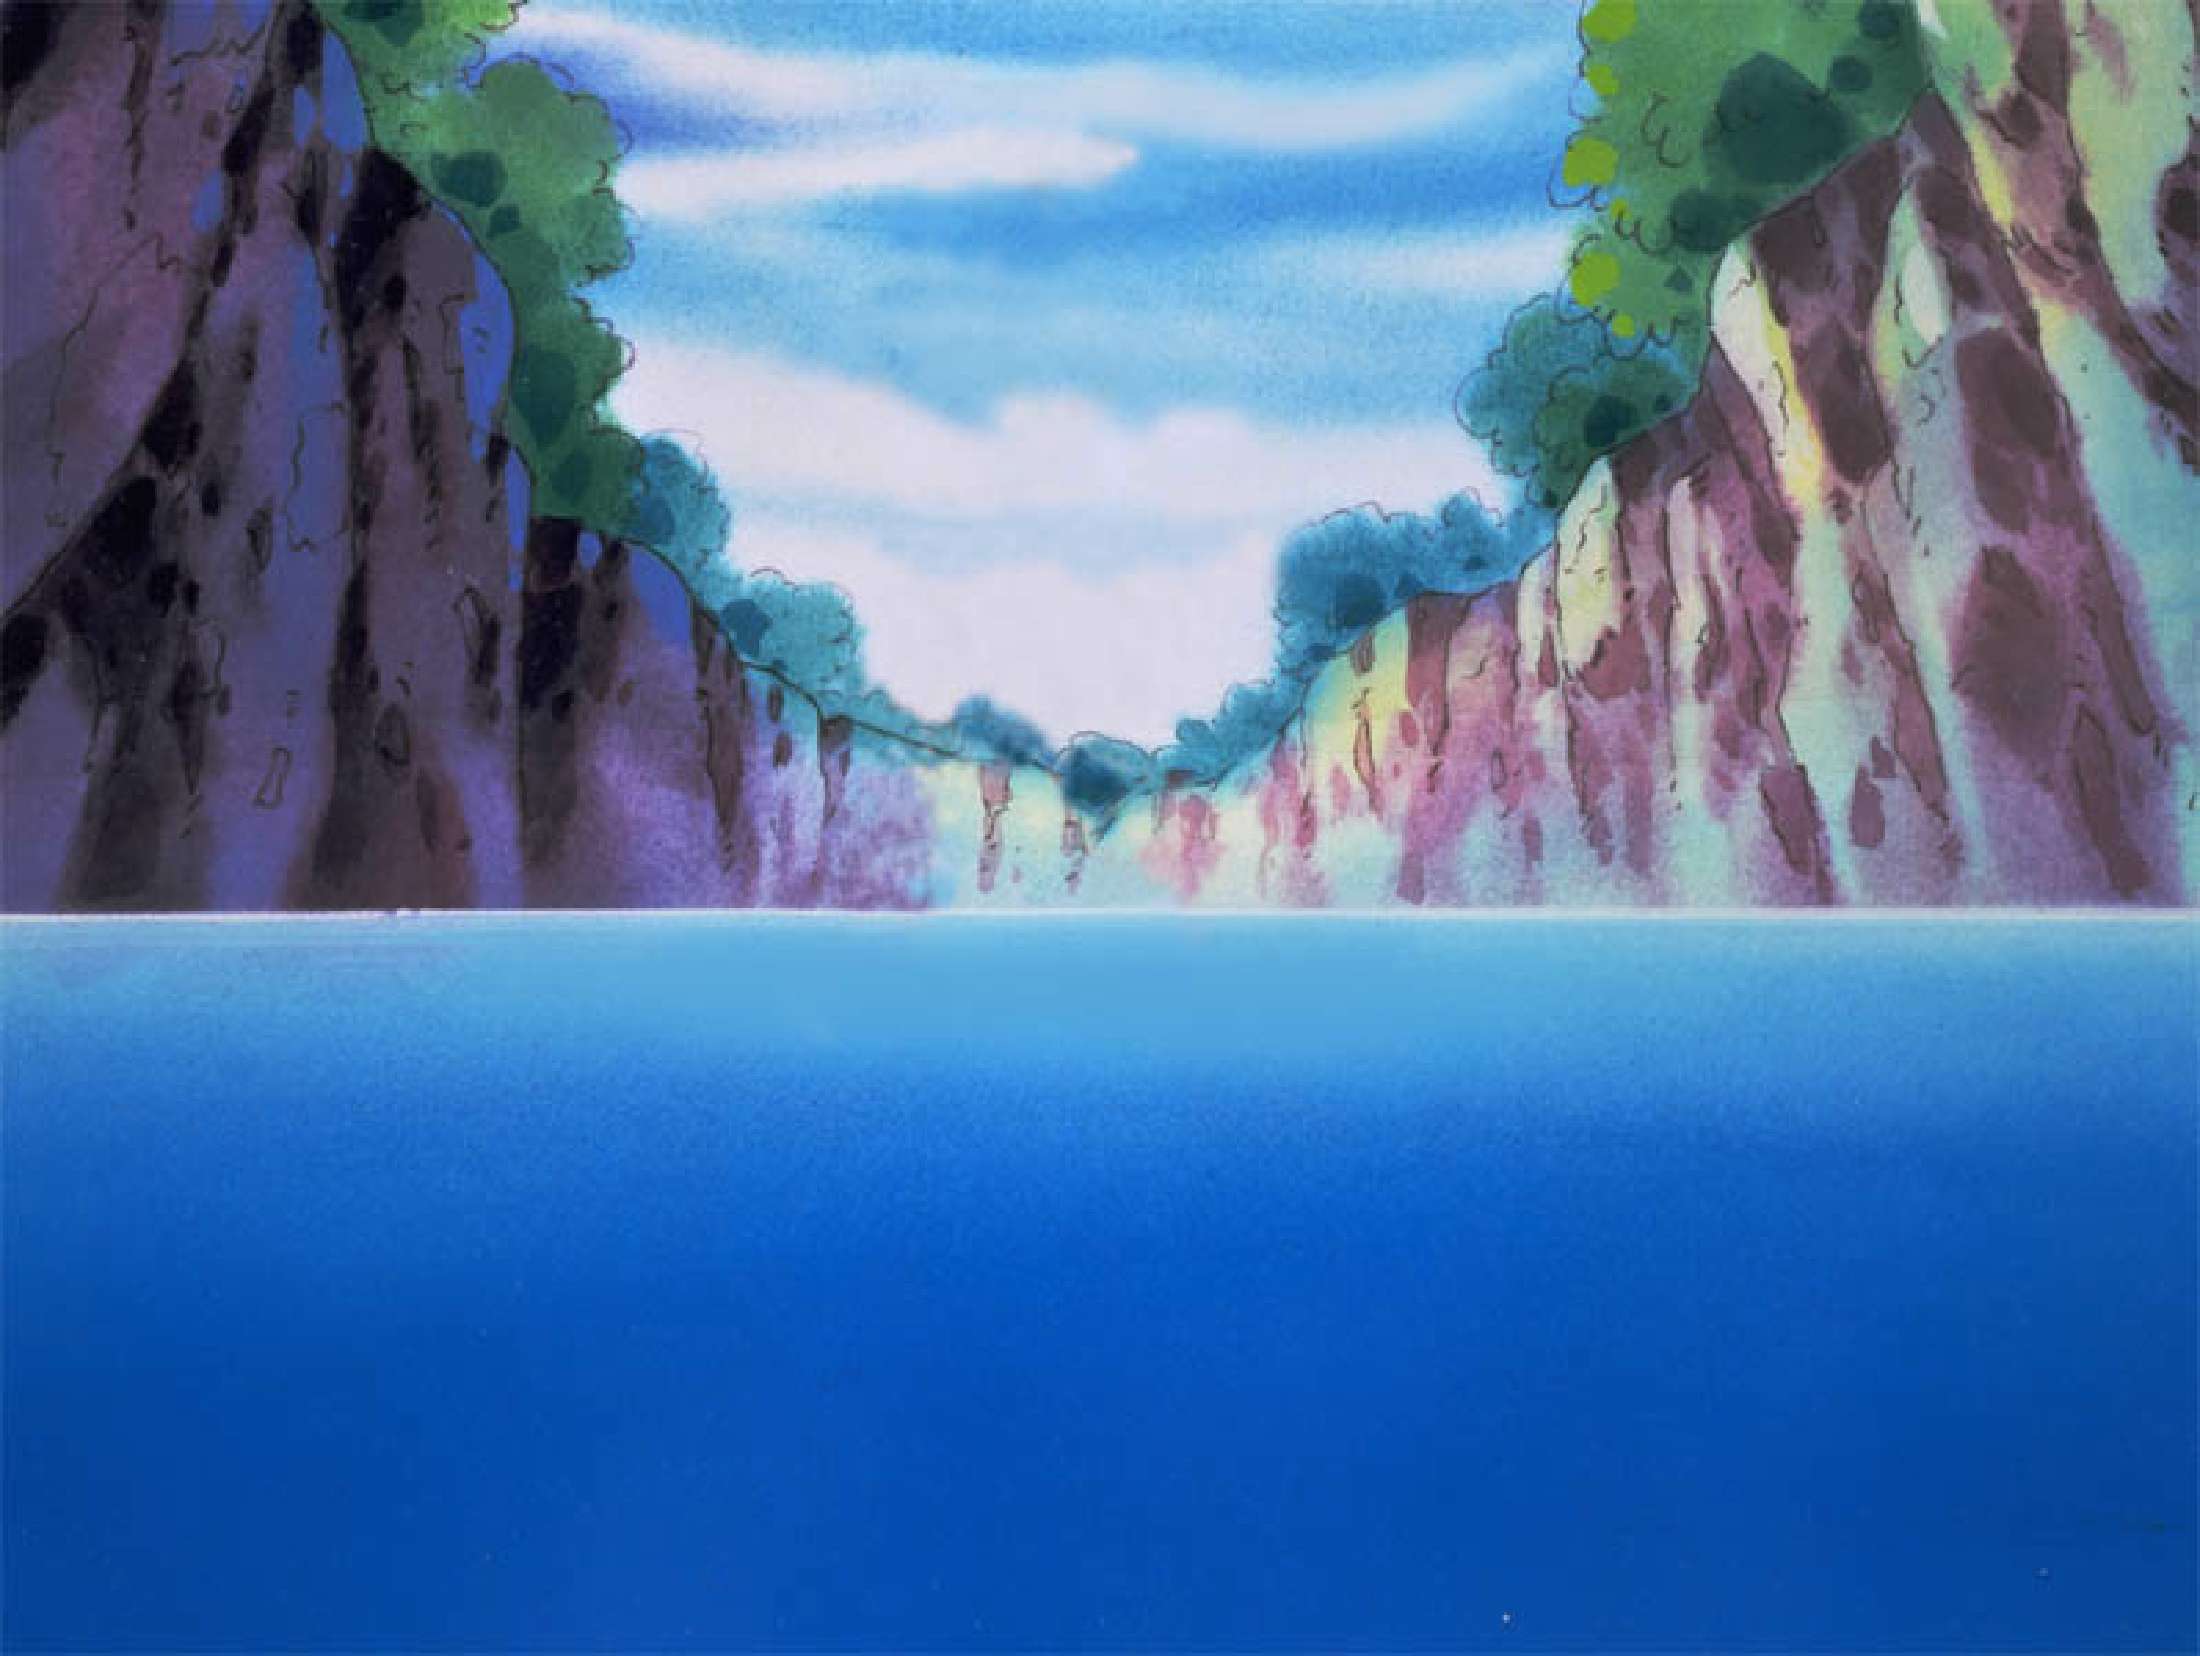 Pokemon Anime Background